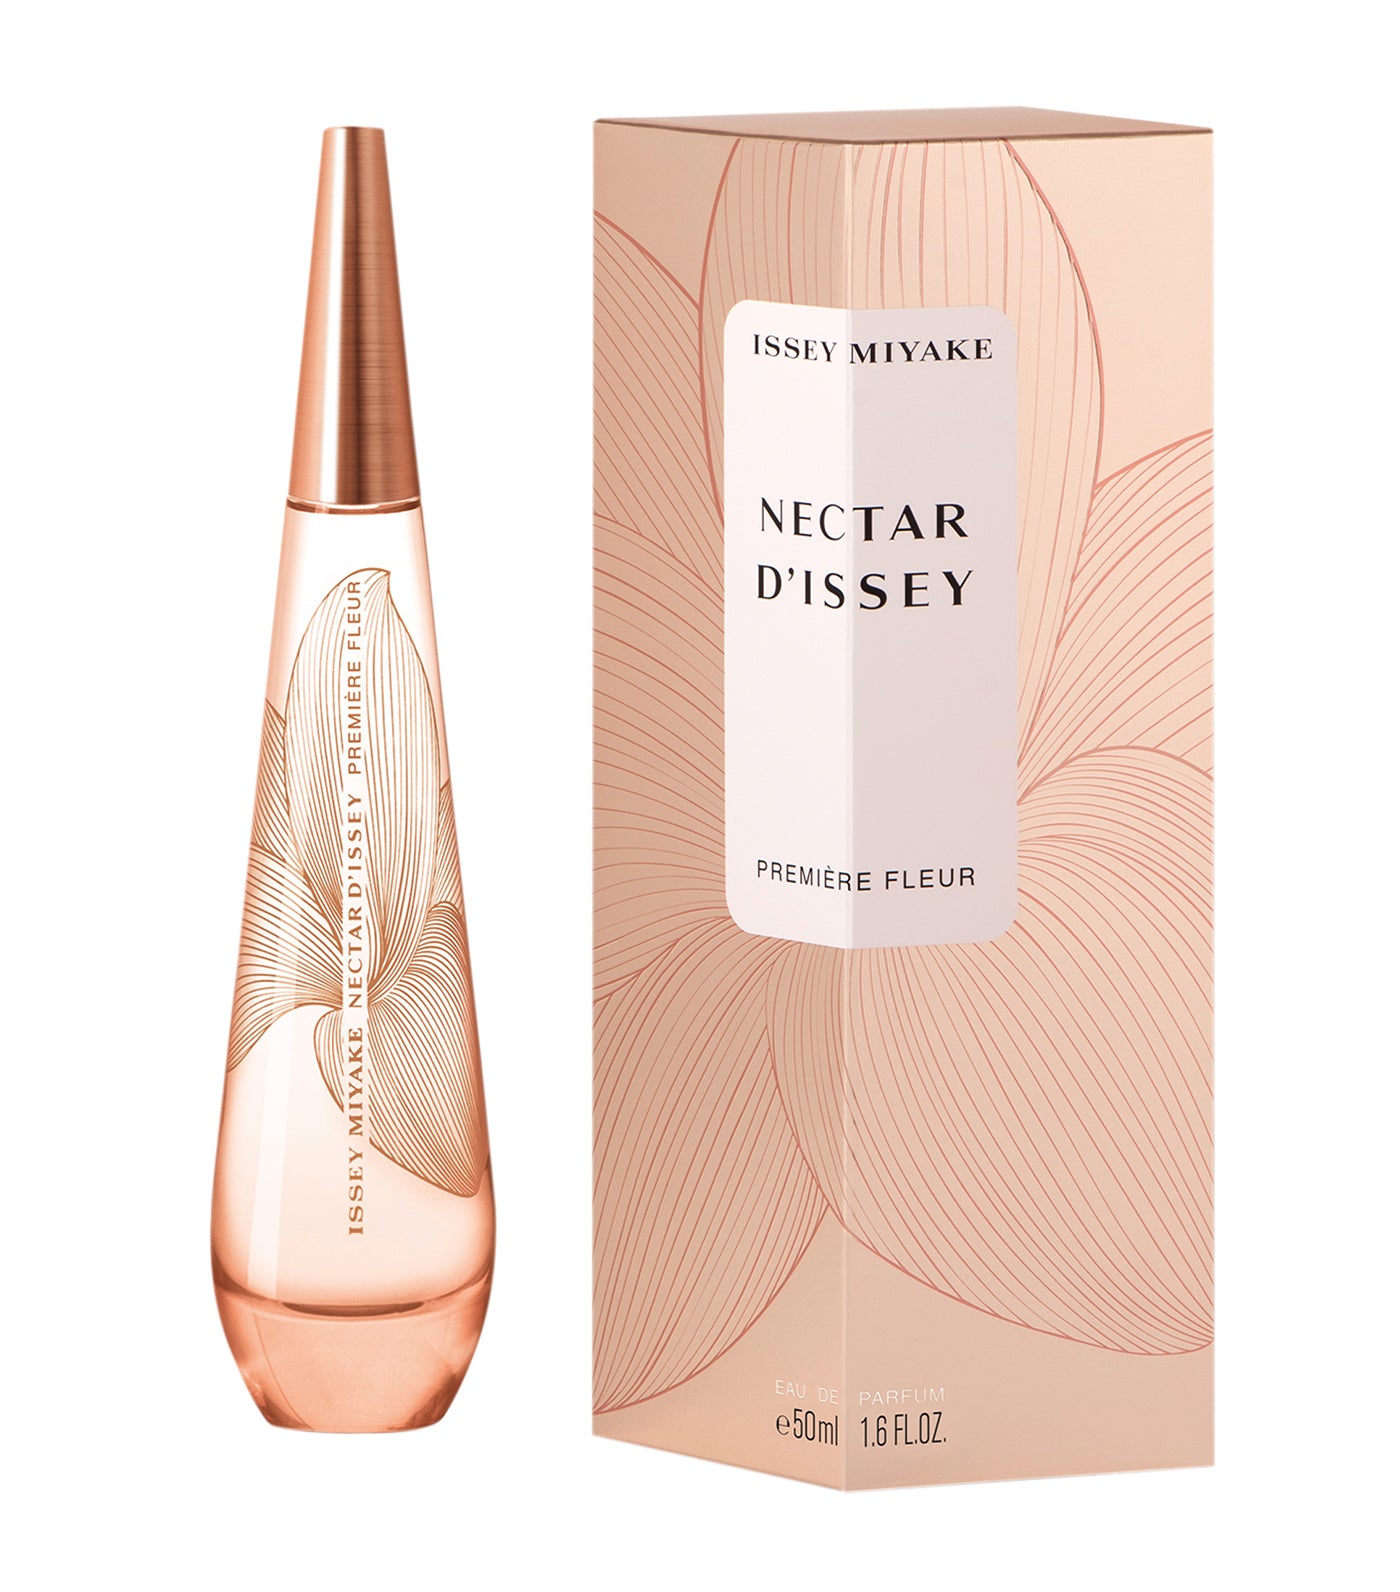 Issey Miyake Nectar d'Issey Première Fleur